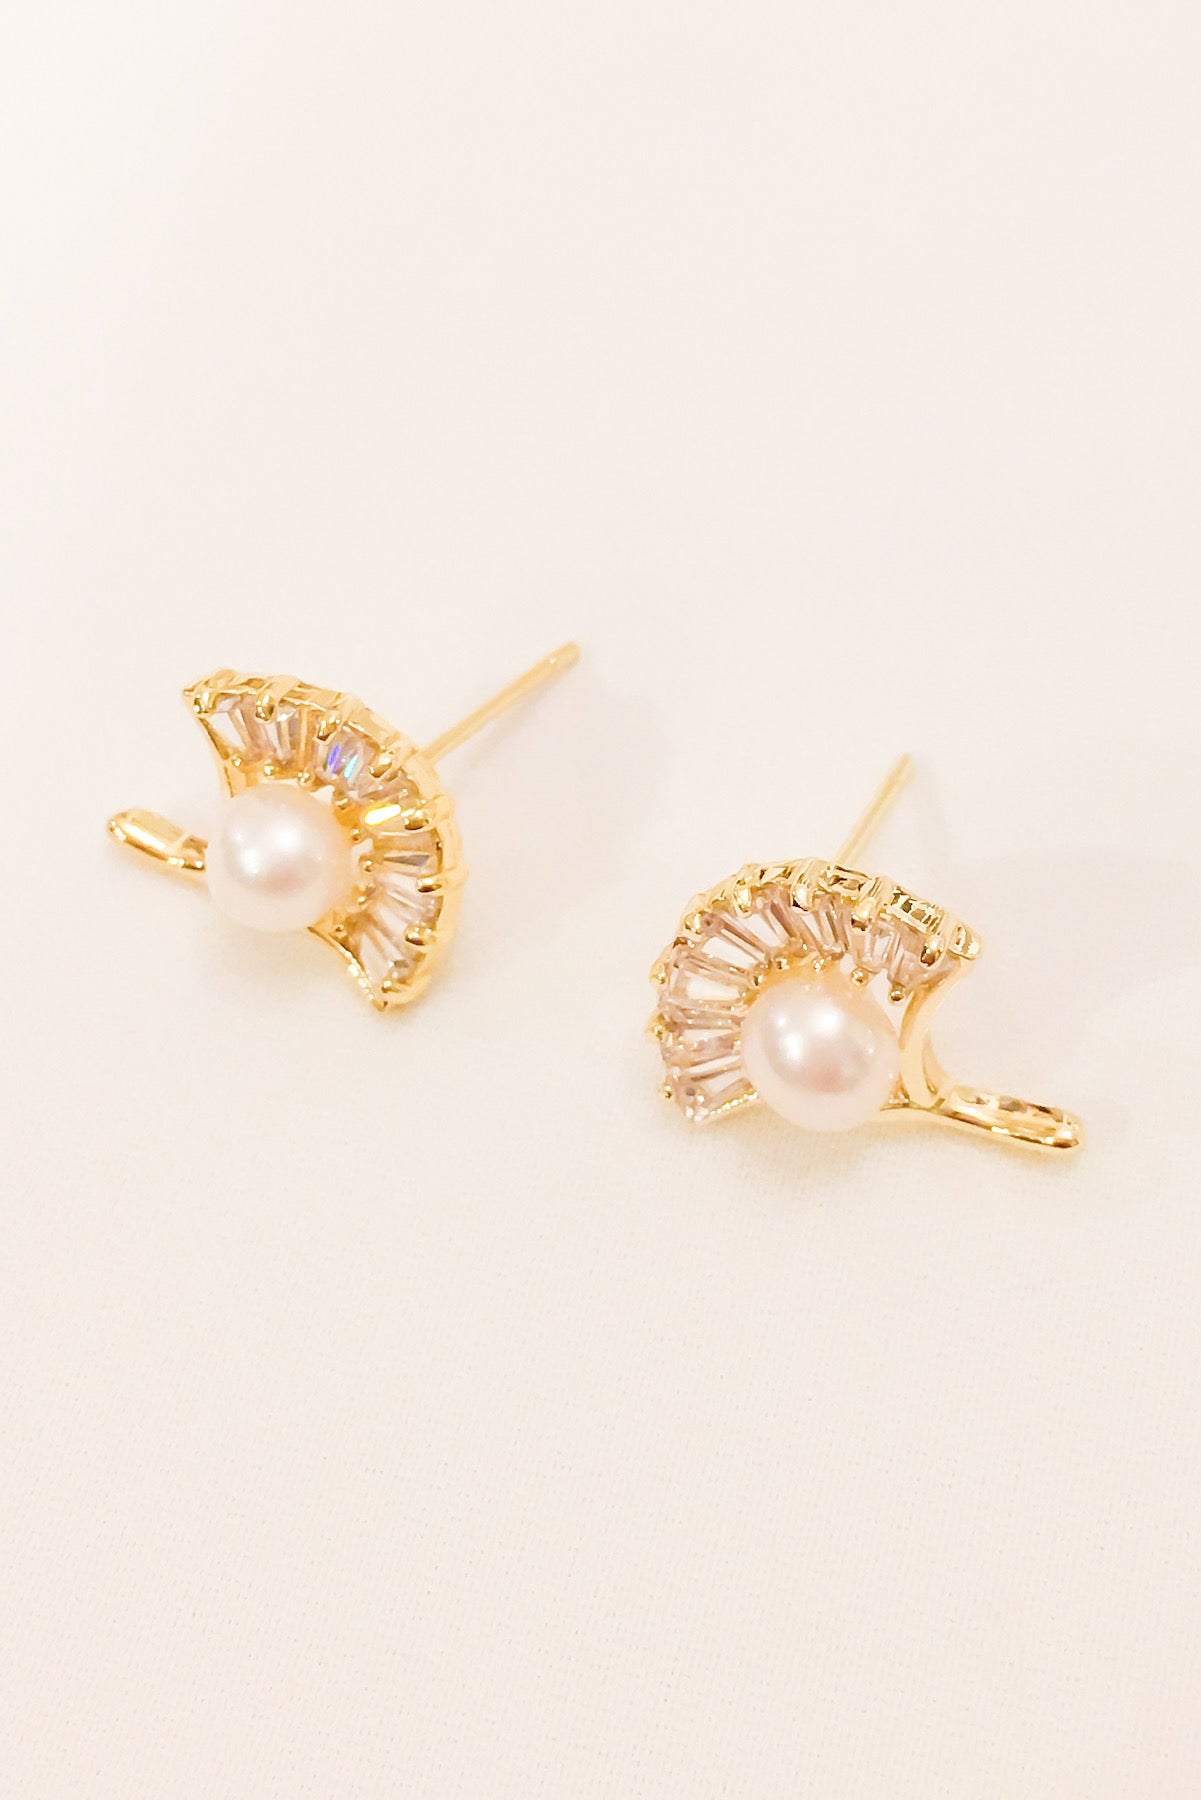 SKYE San Francisco Shop SF Chic Modern Elegant Classy Women Jewelry French Parisian Minimalist Ember 18K Gold Freshwater Pearl Earrings